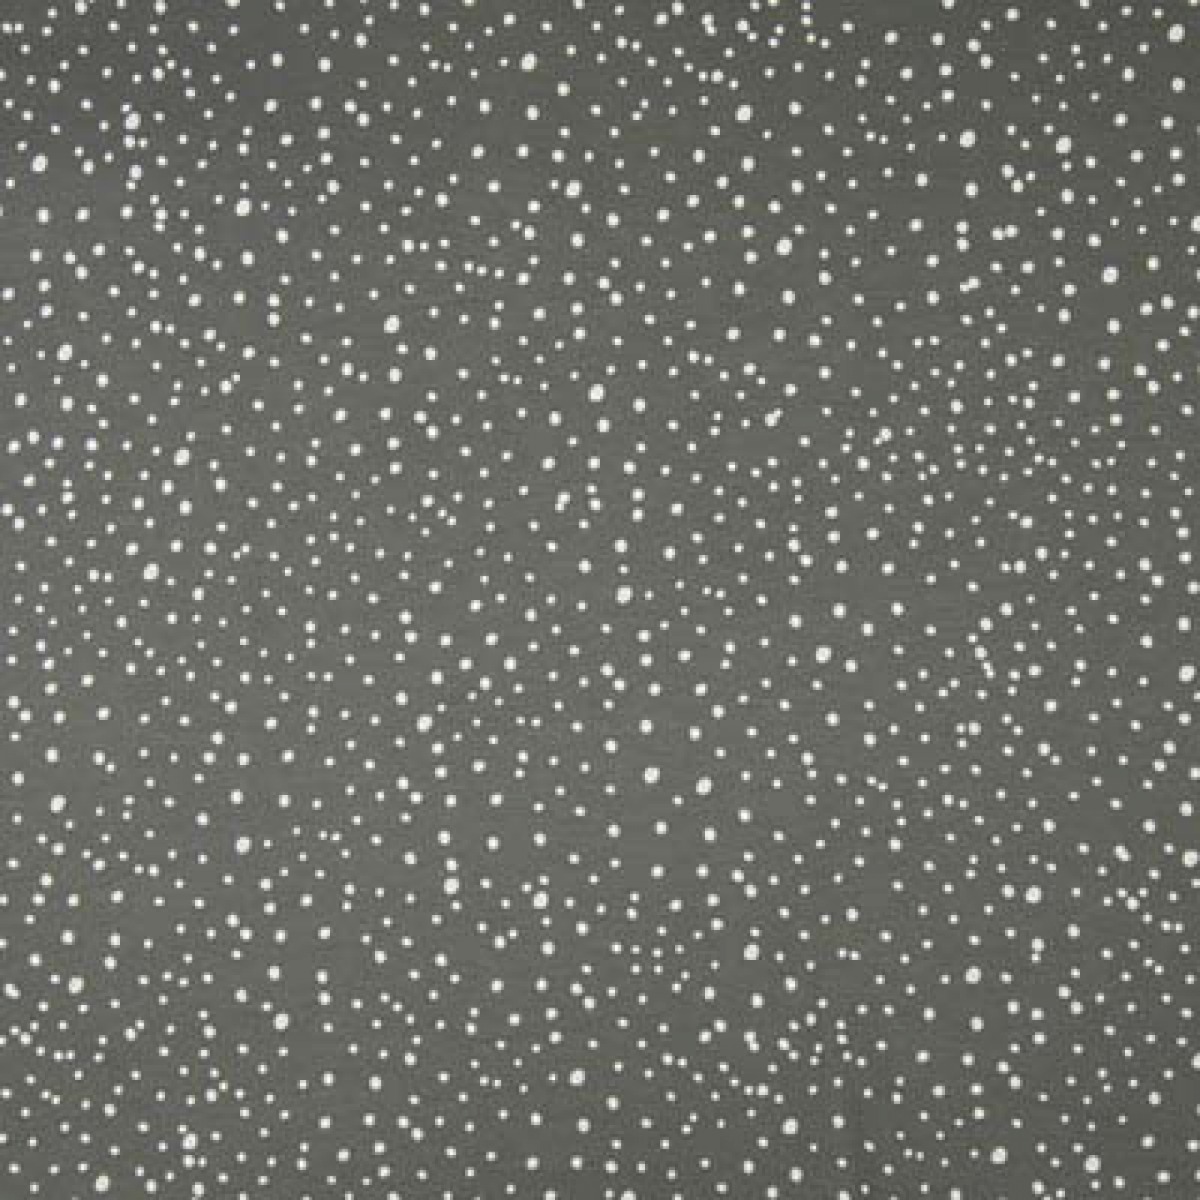 Baumwolle Dots World Dunkelgrau